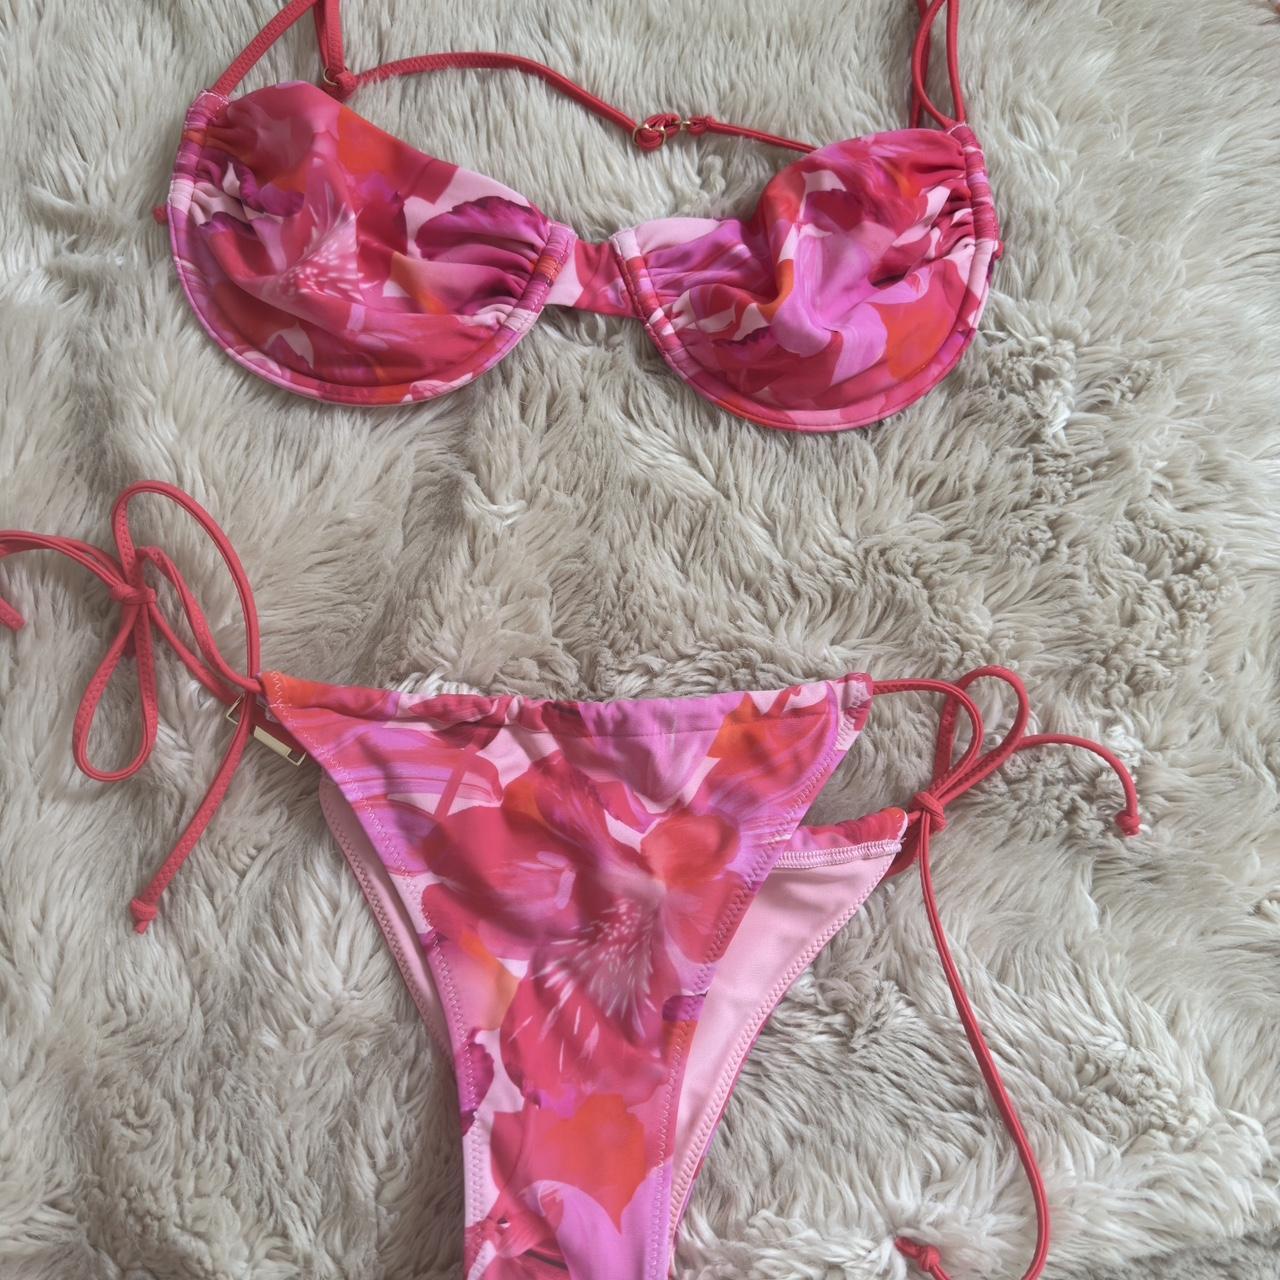 Whitefox pink bikini size small - Depop